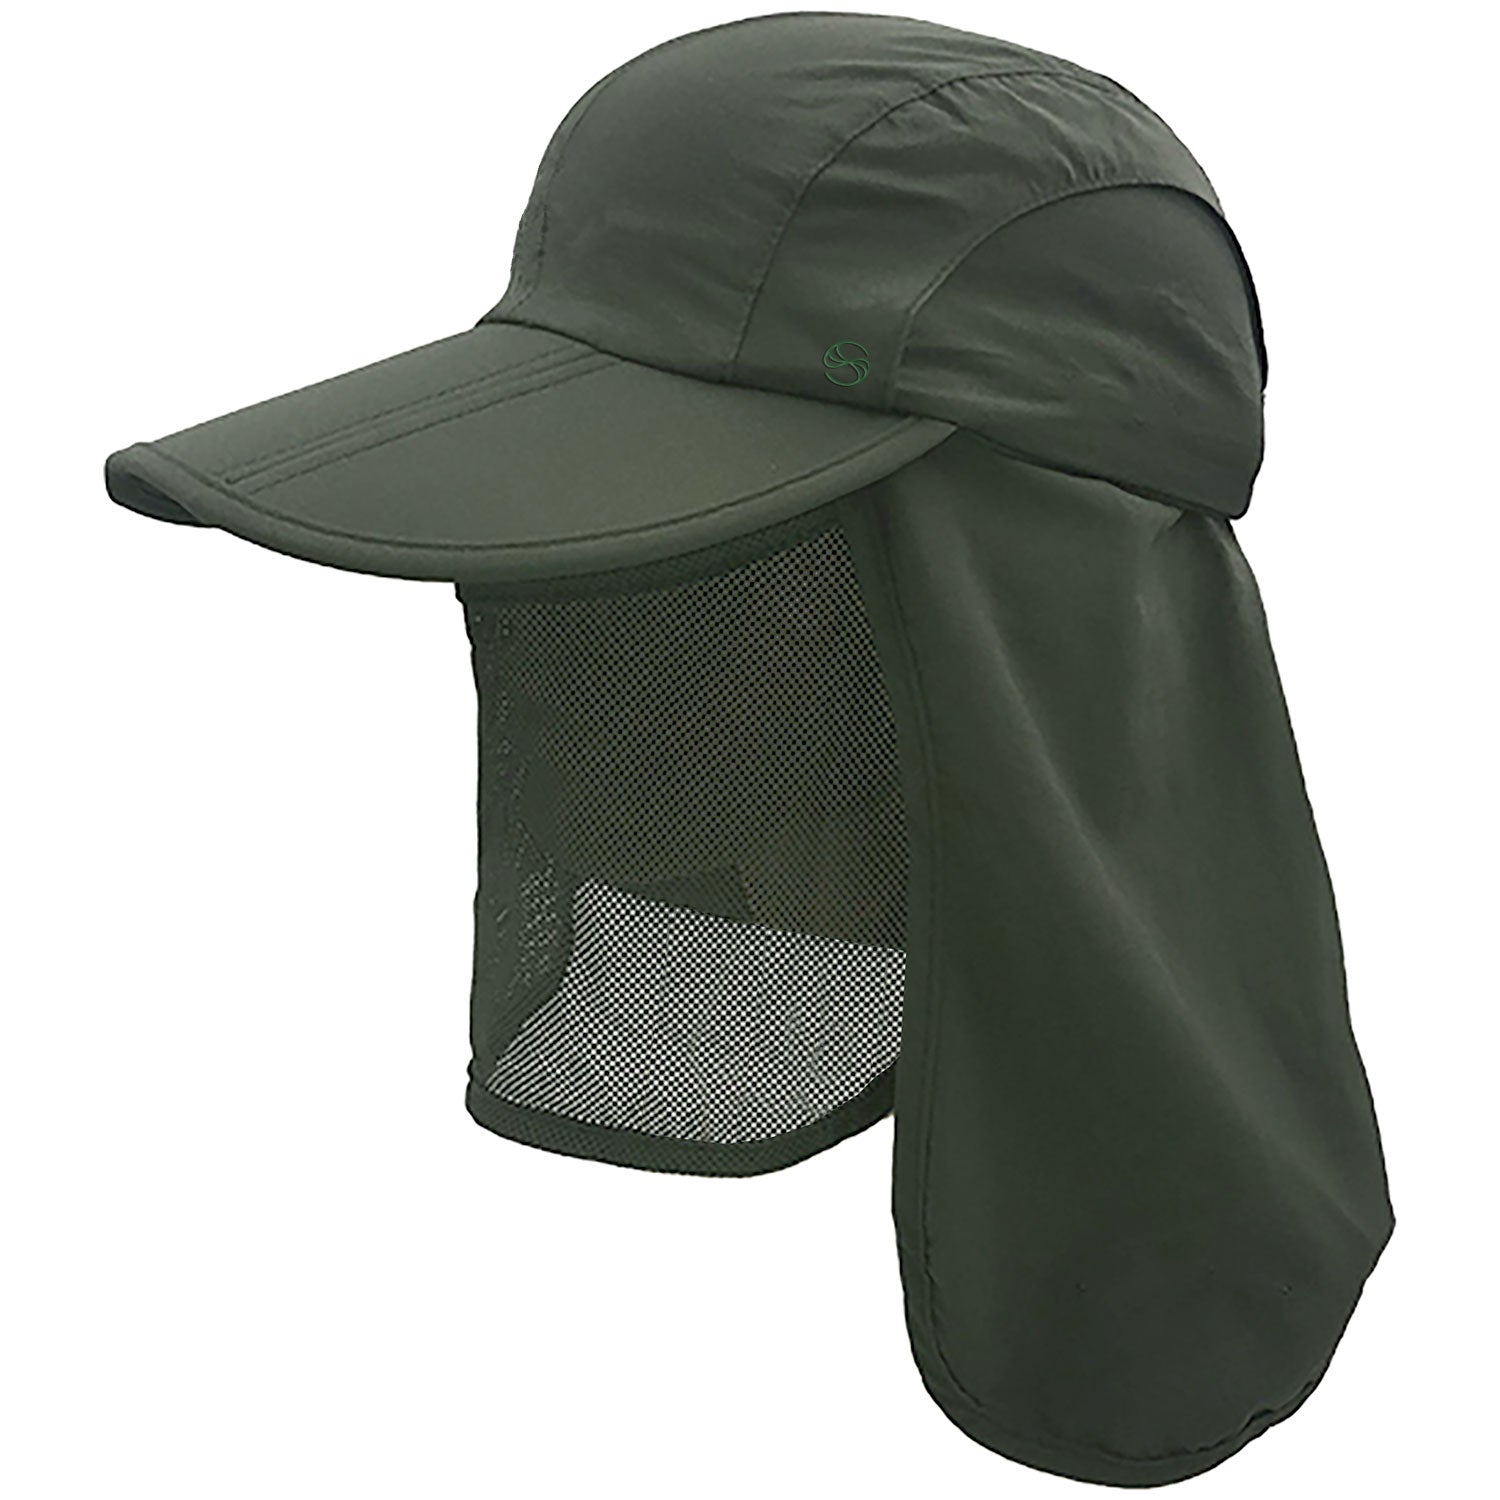 SOBEYO unisex Outdoor Snap Hats Fishing Hiking Boonie Hunting Brim Ear Neck Cover Sun Flap Cap, Dark Grey / One